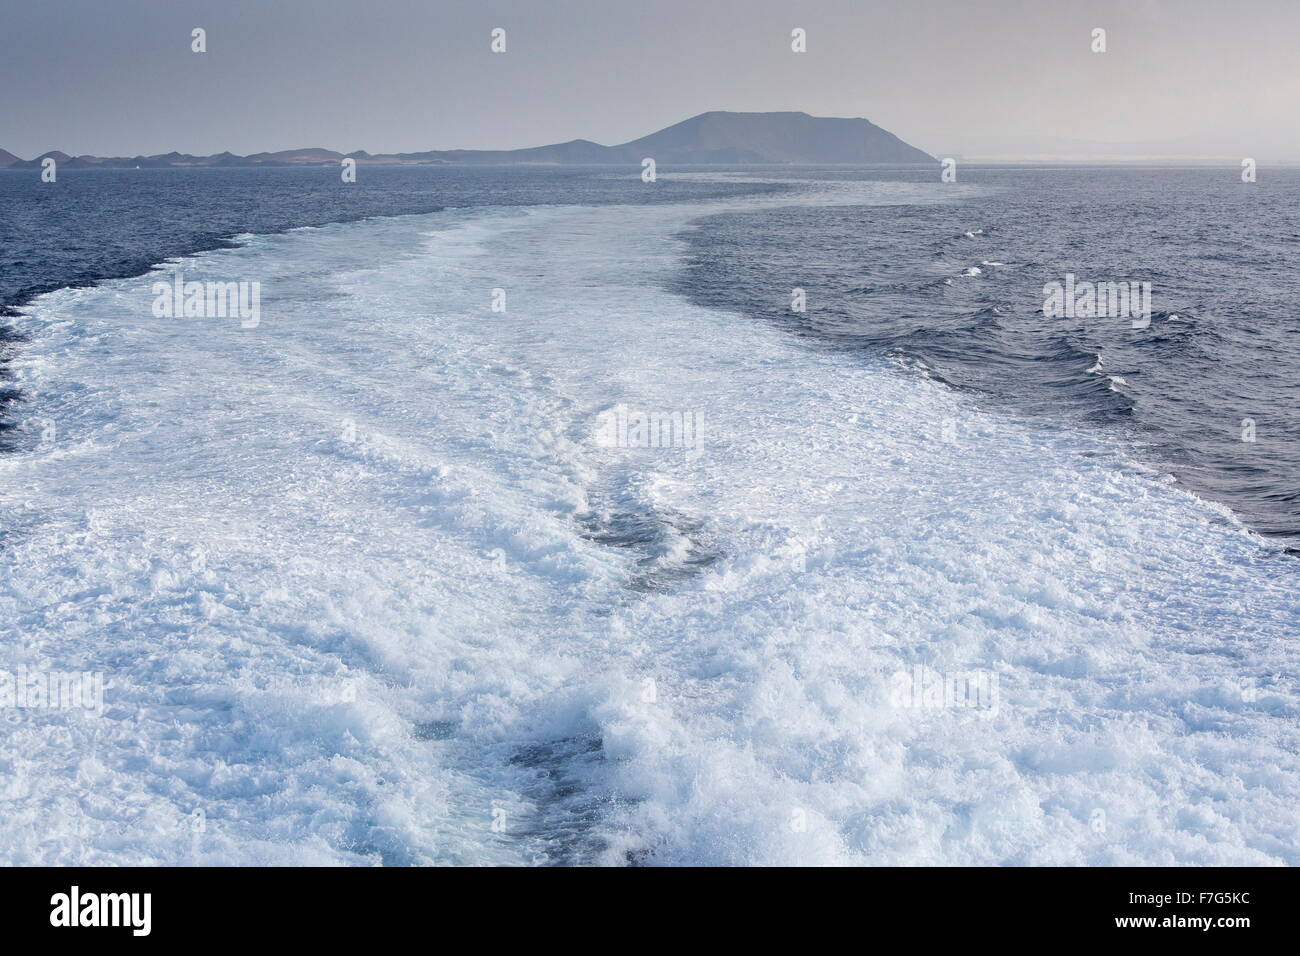 The sea crossing between Lanzarote and Fuerteventura, Canary islands. Stock Photo